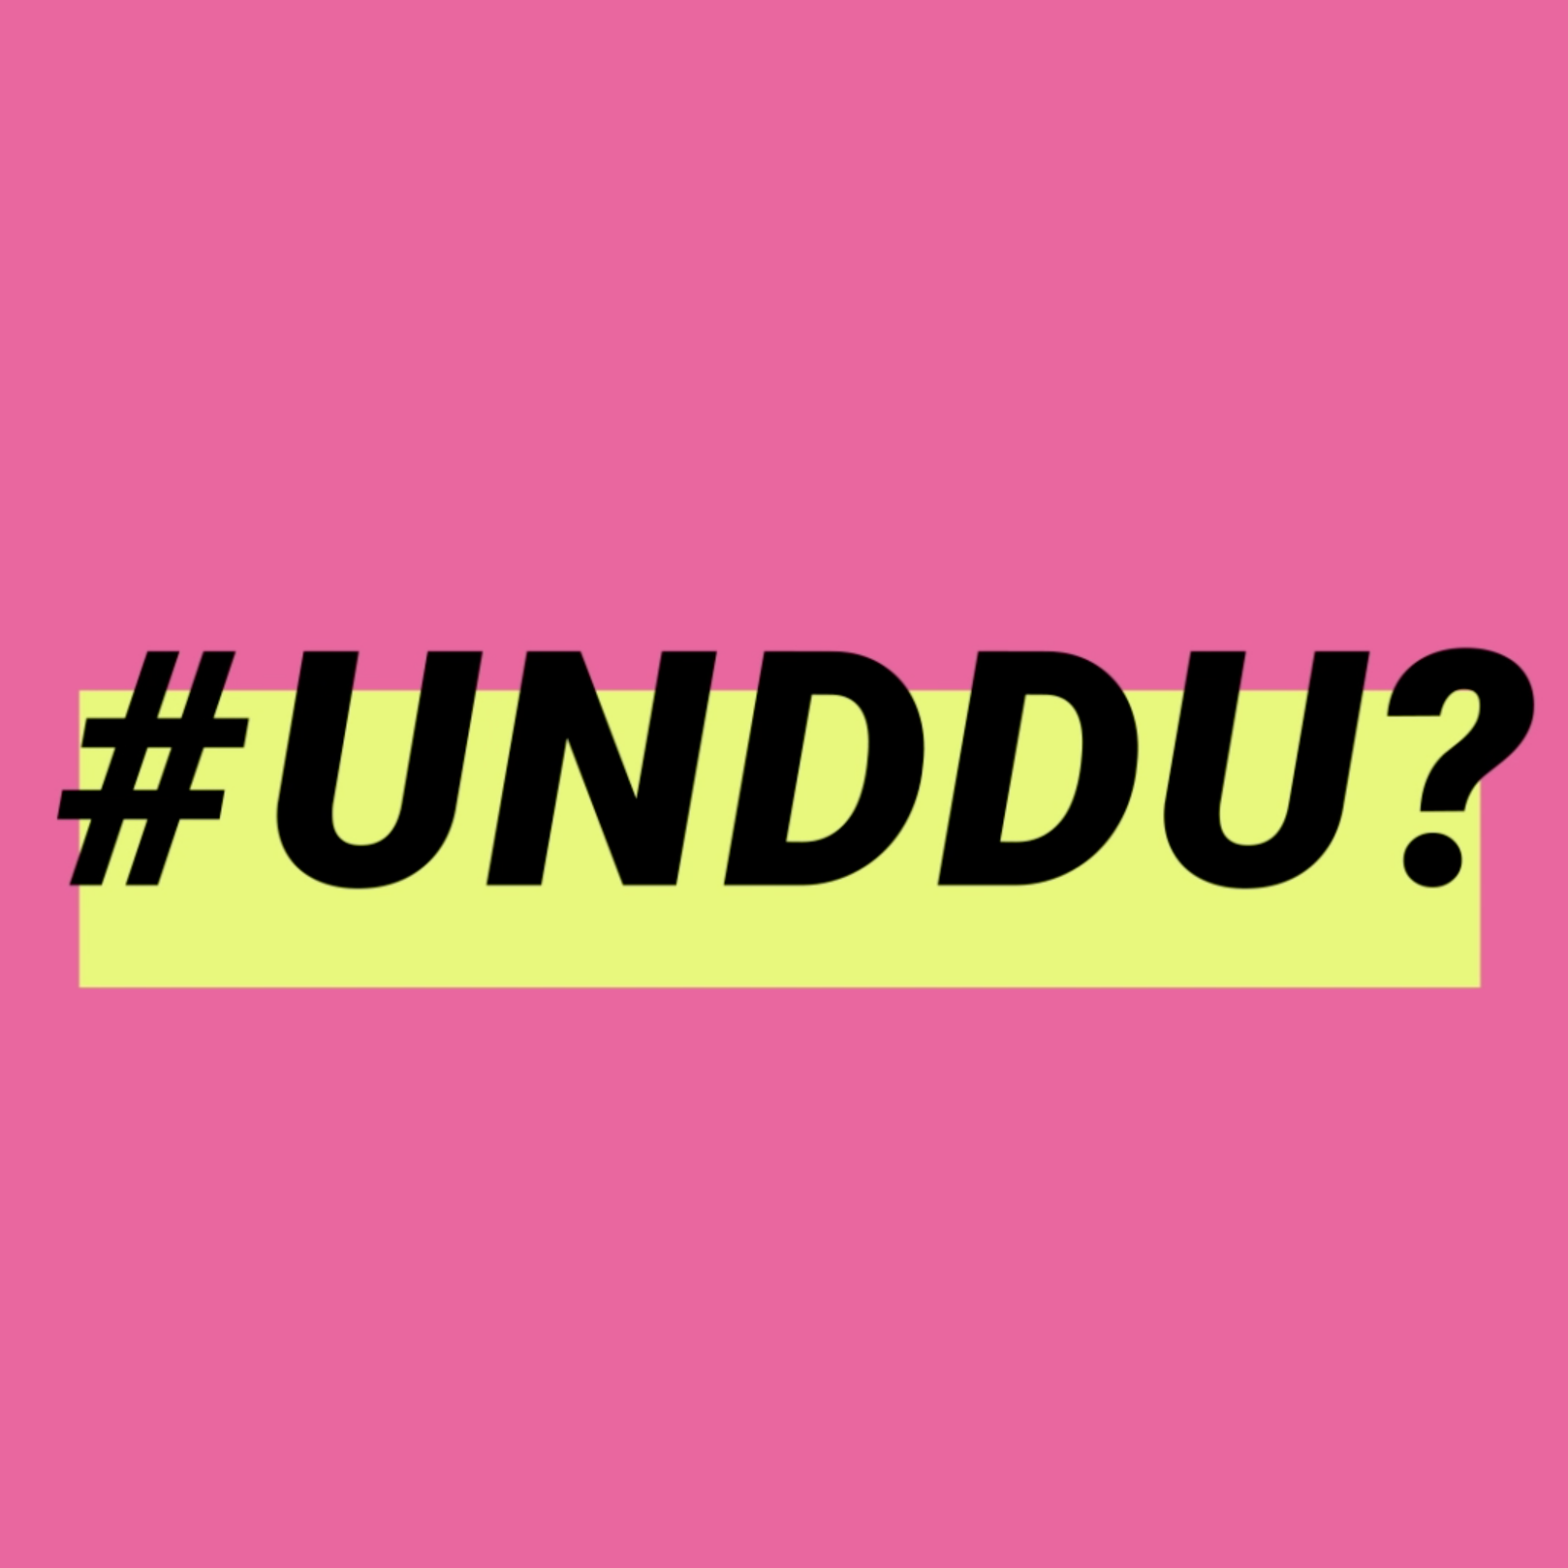 Kampagnenlogo #UNDDU?